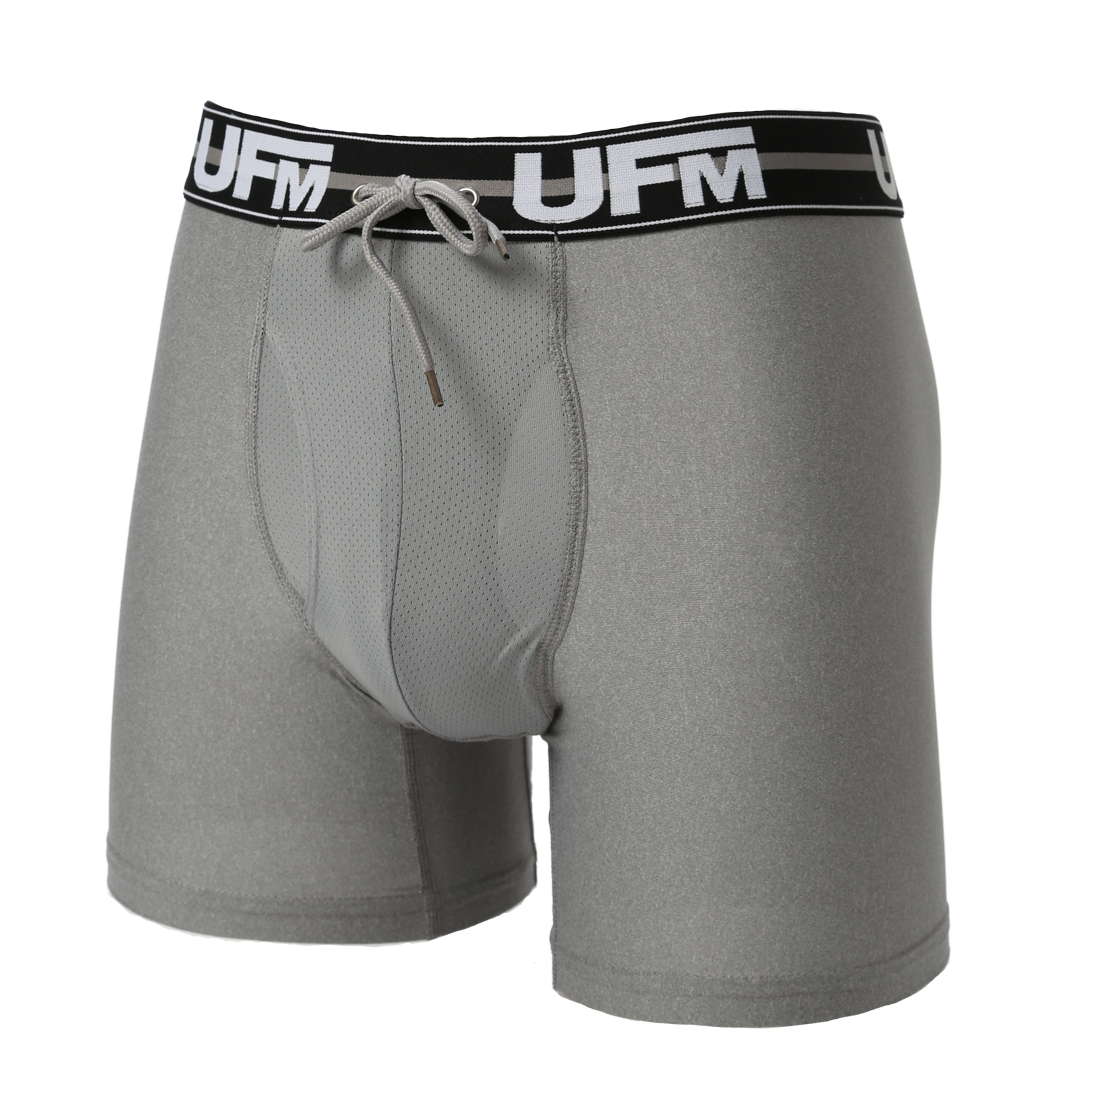 Buy UFM Underwear for Men Adjustable Athletic Support Brief L (32